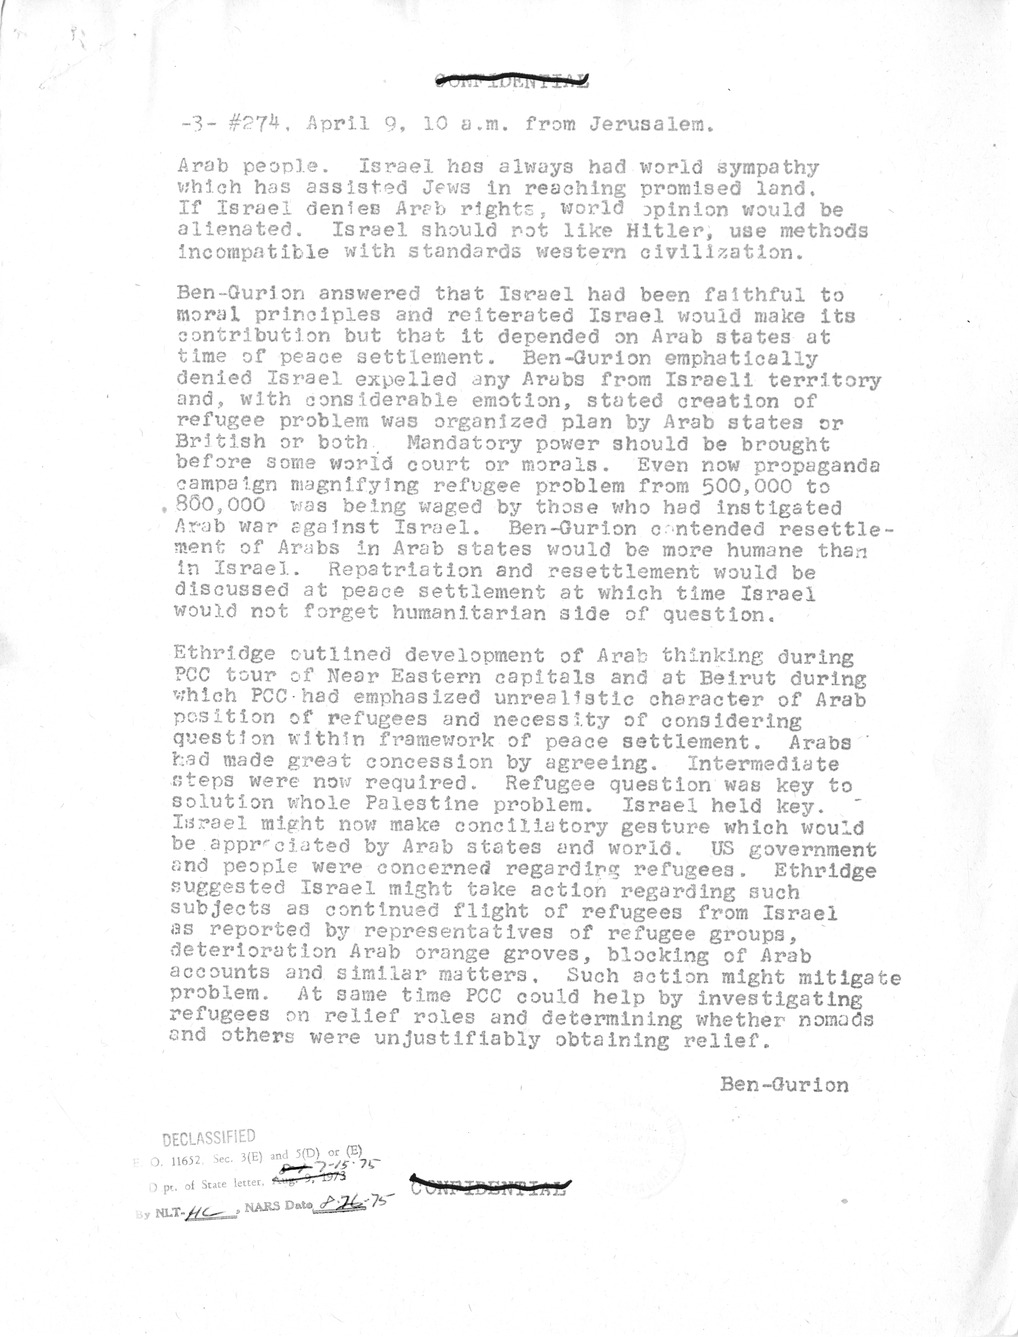 Telegram from William C. Burdett, Jr., to Secretary of State Dean Acheson